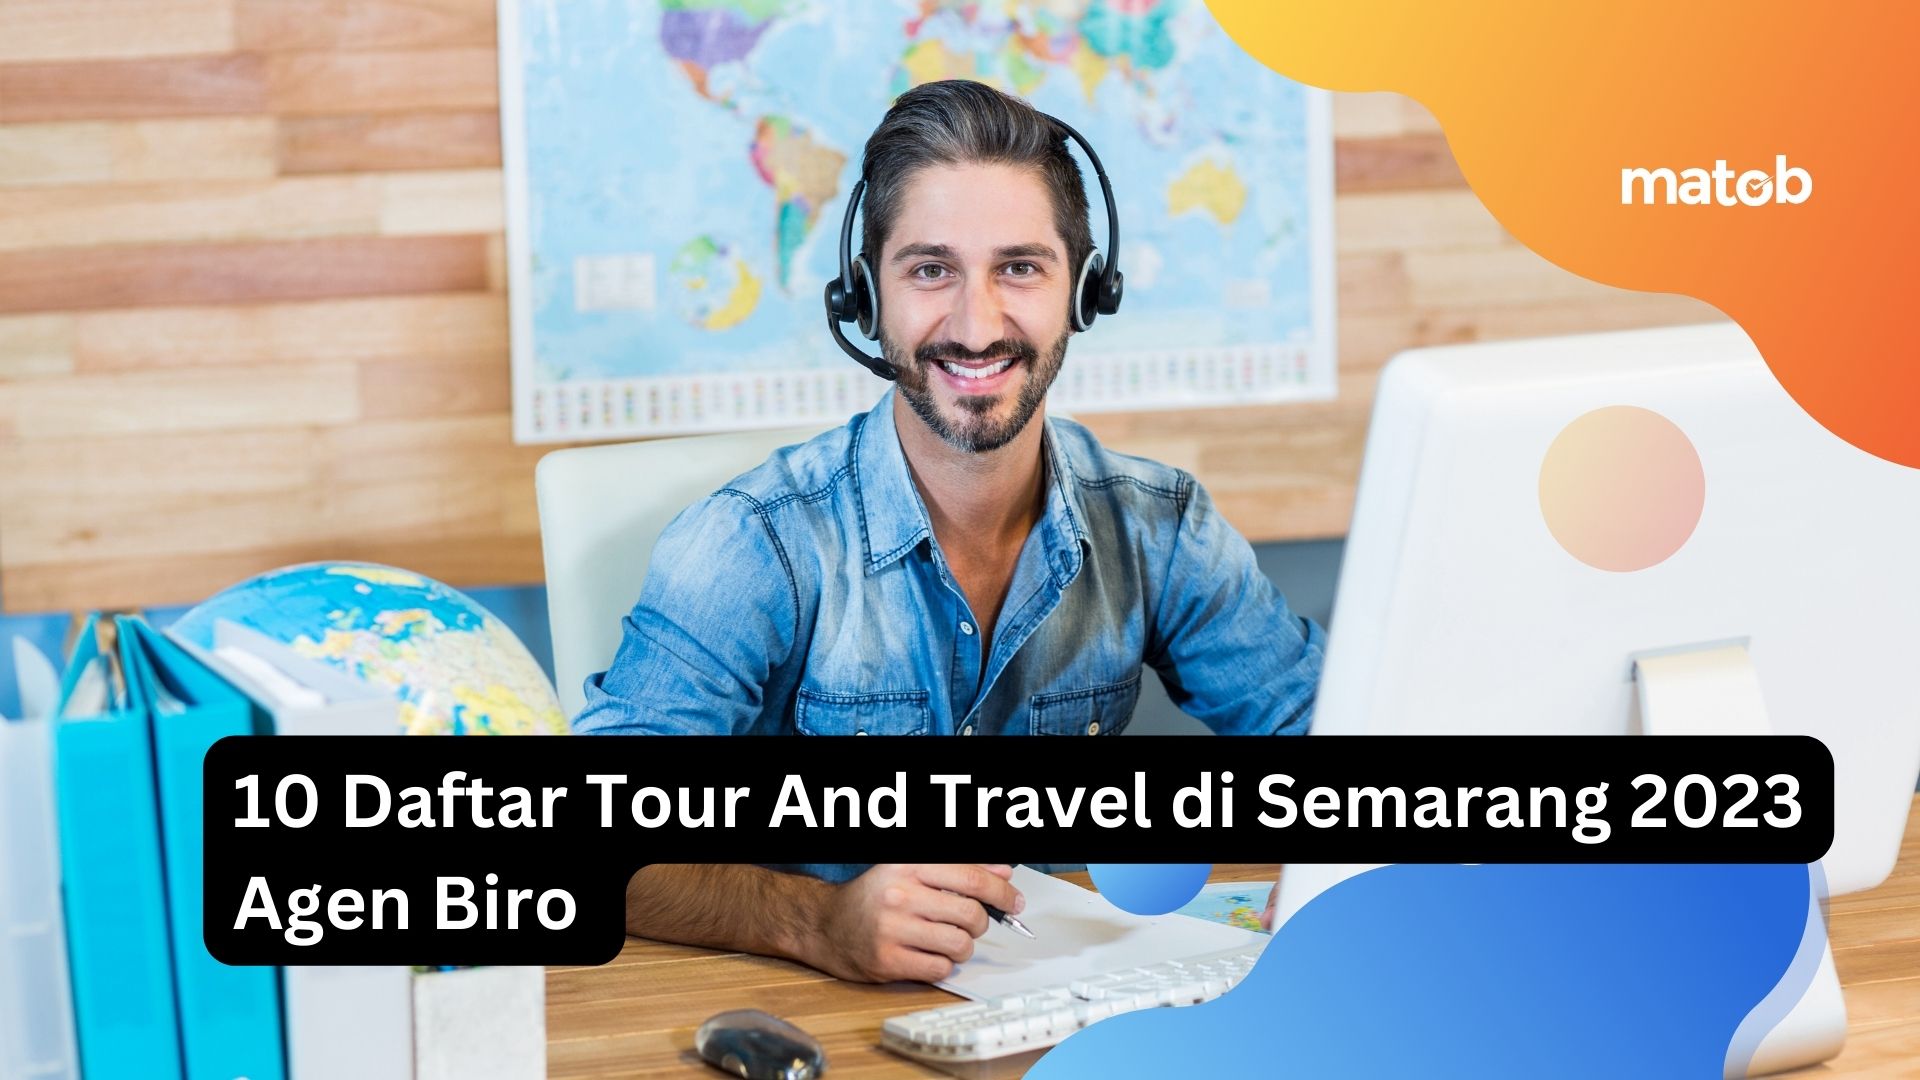 10 Daftar Tour And Travel di Semarang 2023 Agen Biro